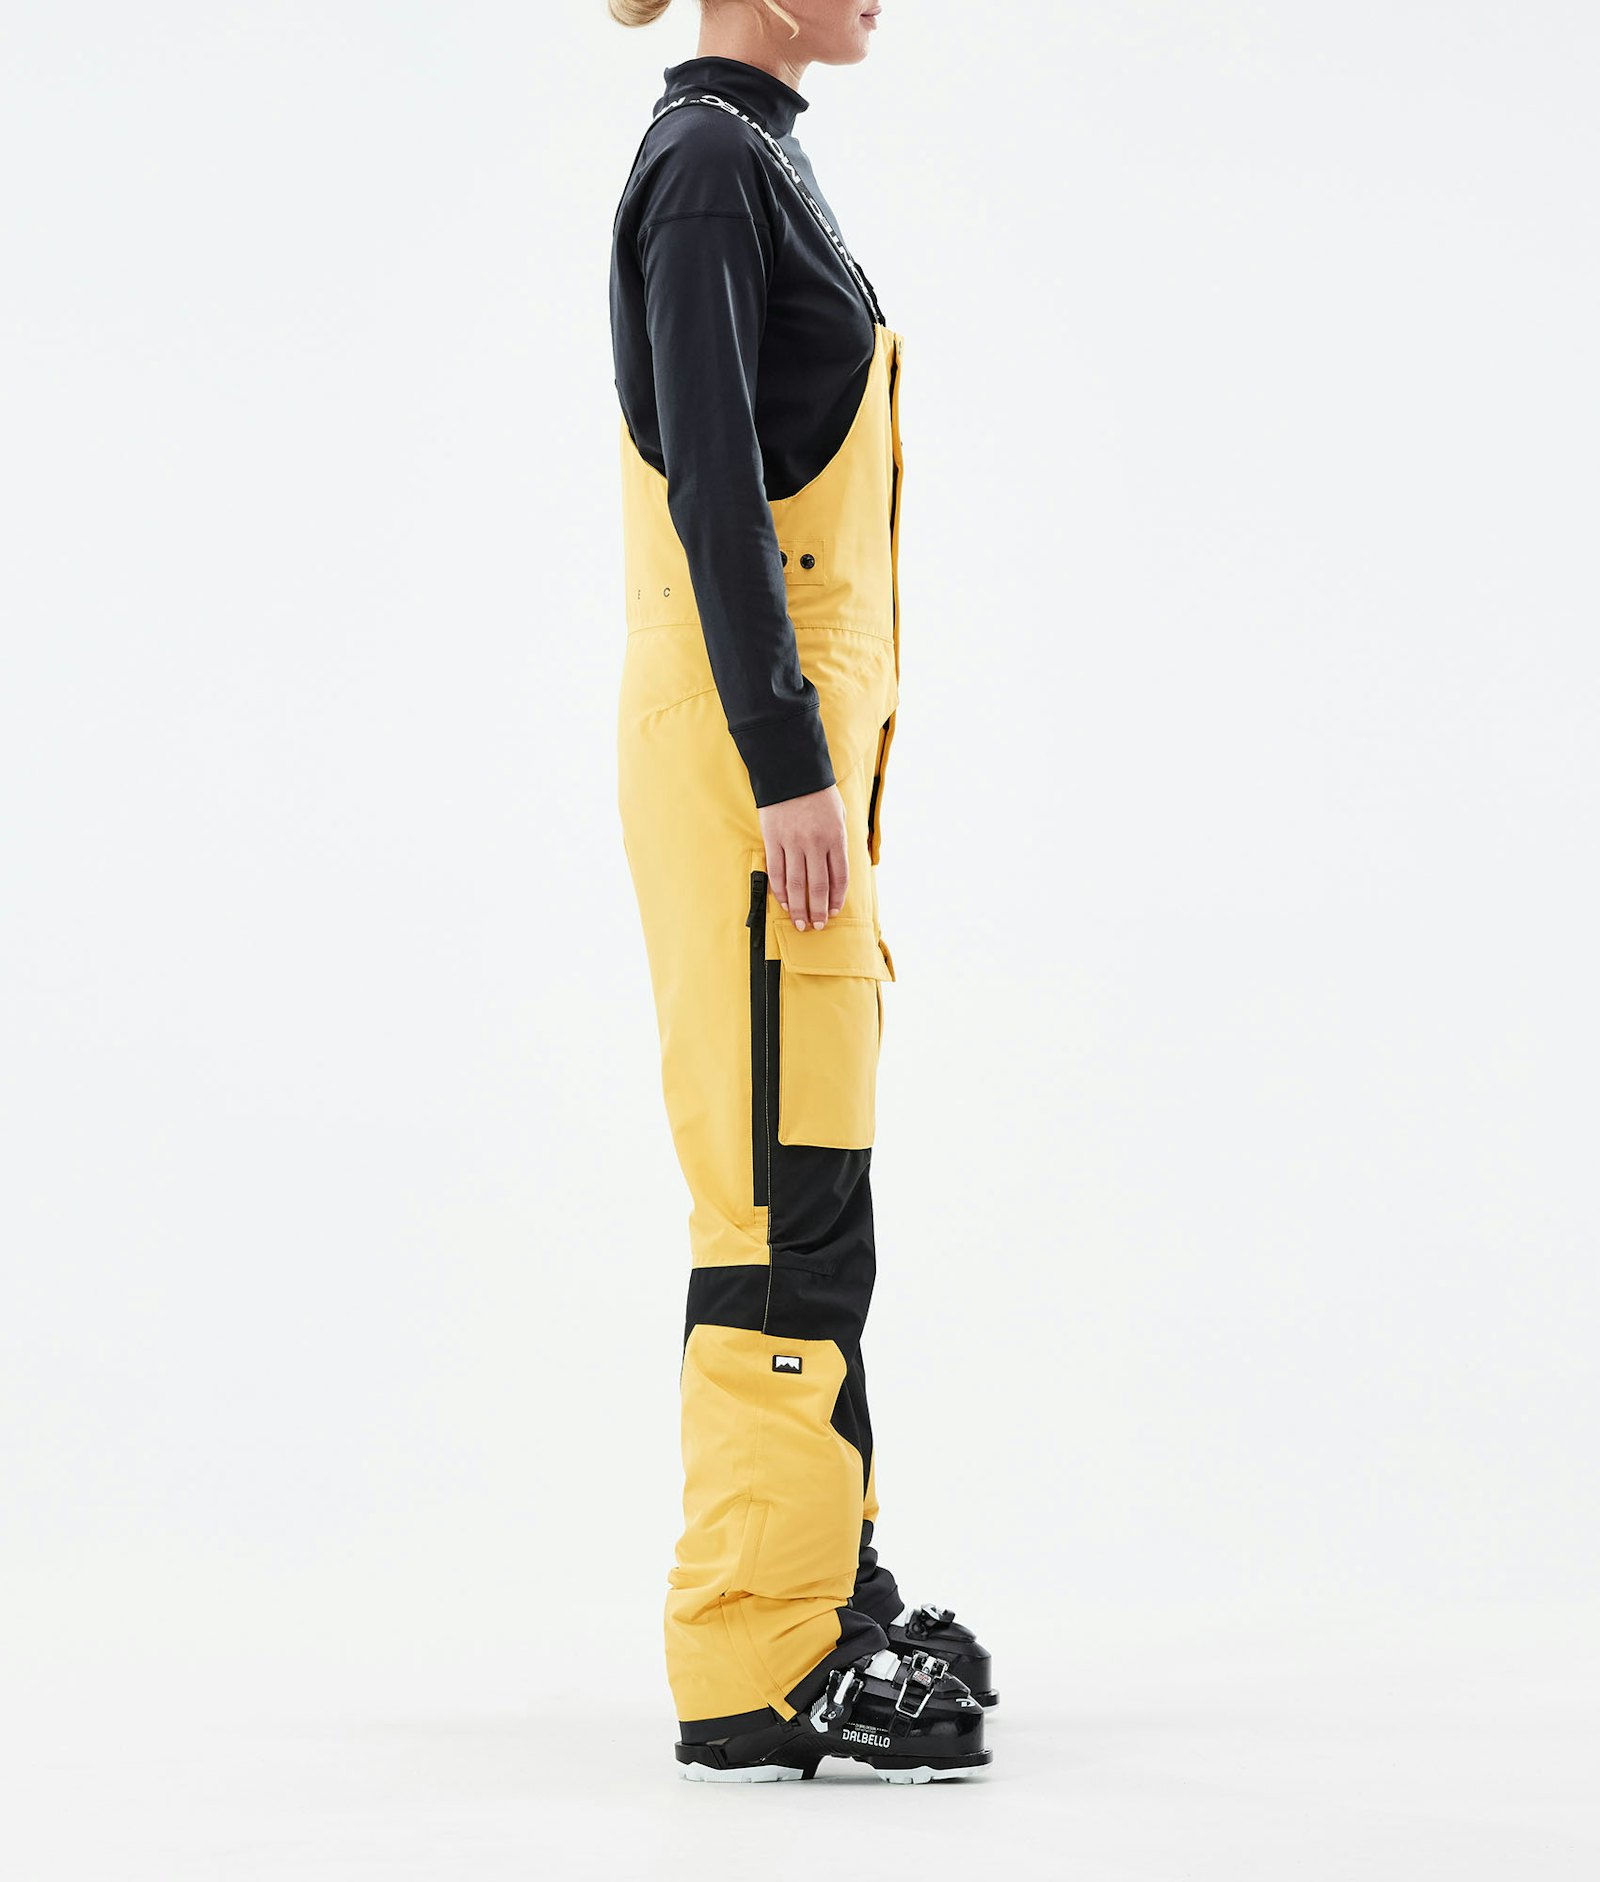 Fawk W 2021 Skihose Damen Yellow/Black